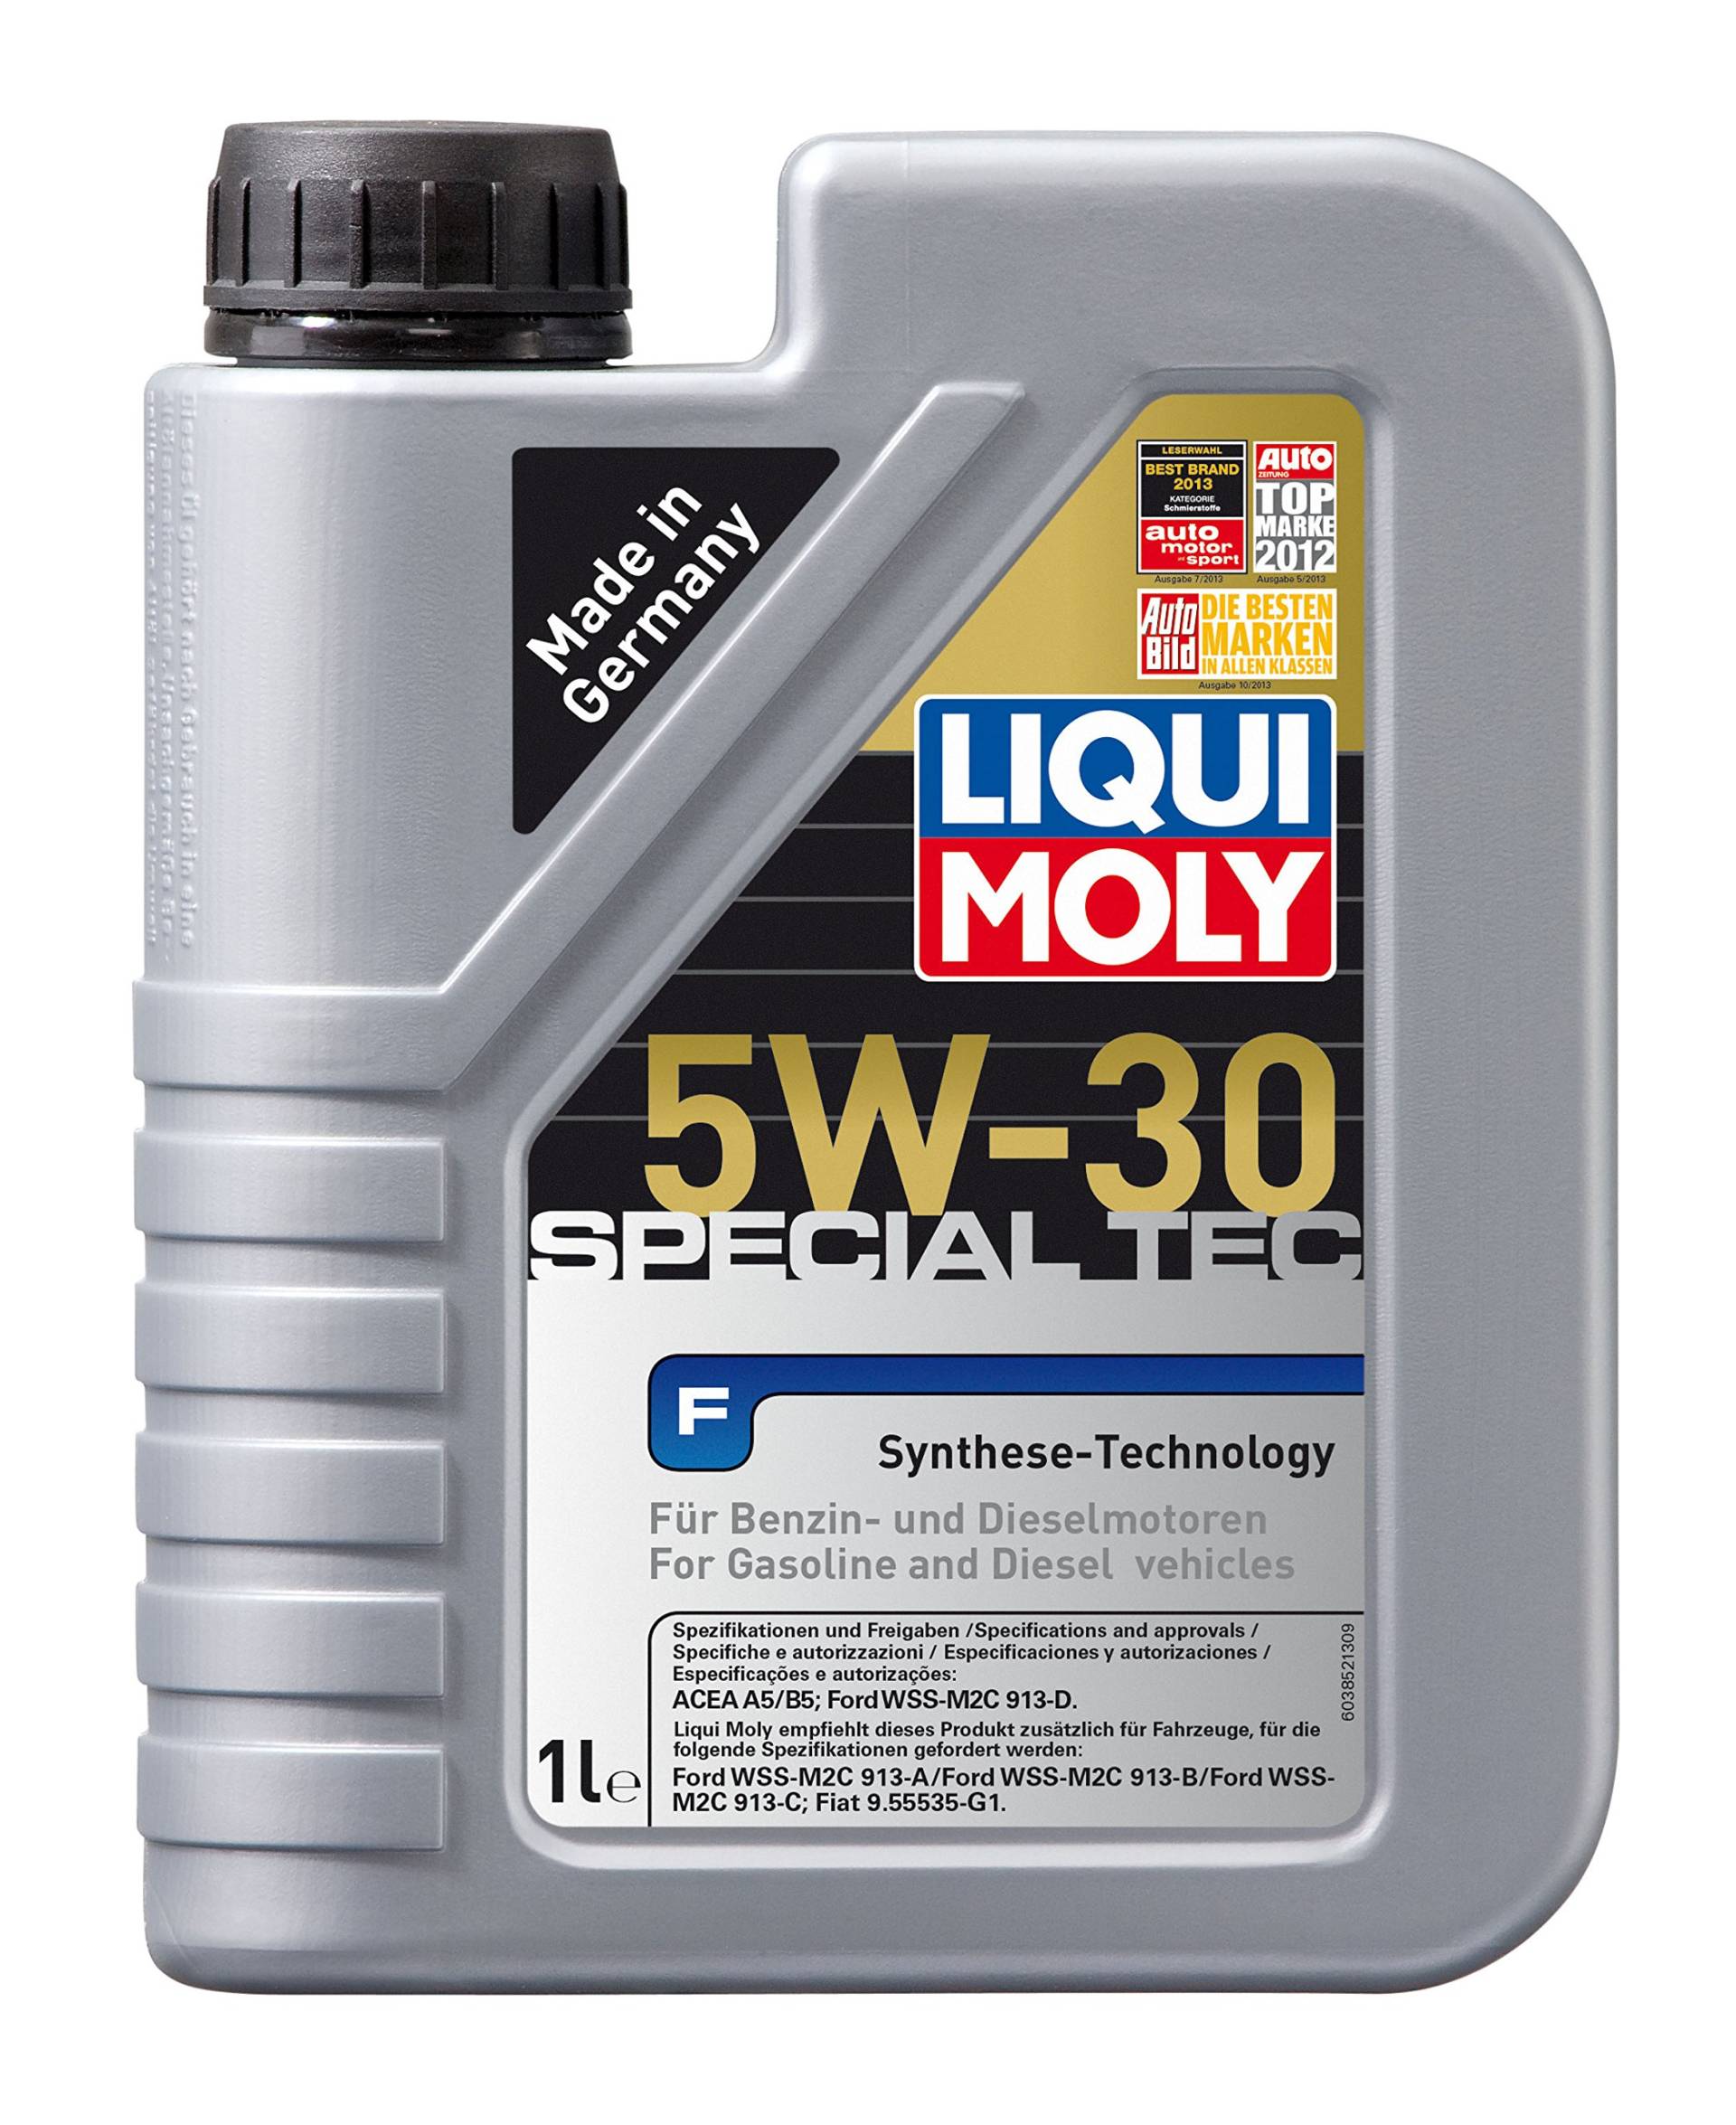 LIQUI MOLY Special Tec F 5W-30 | 1 L | Synthesetechnologie Motoröl | Art.-Nr.: 3852 von Liqui Moly